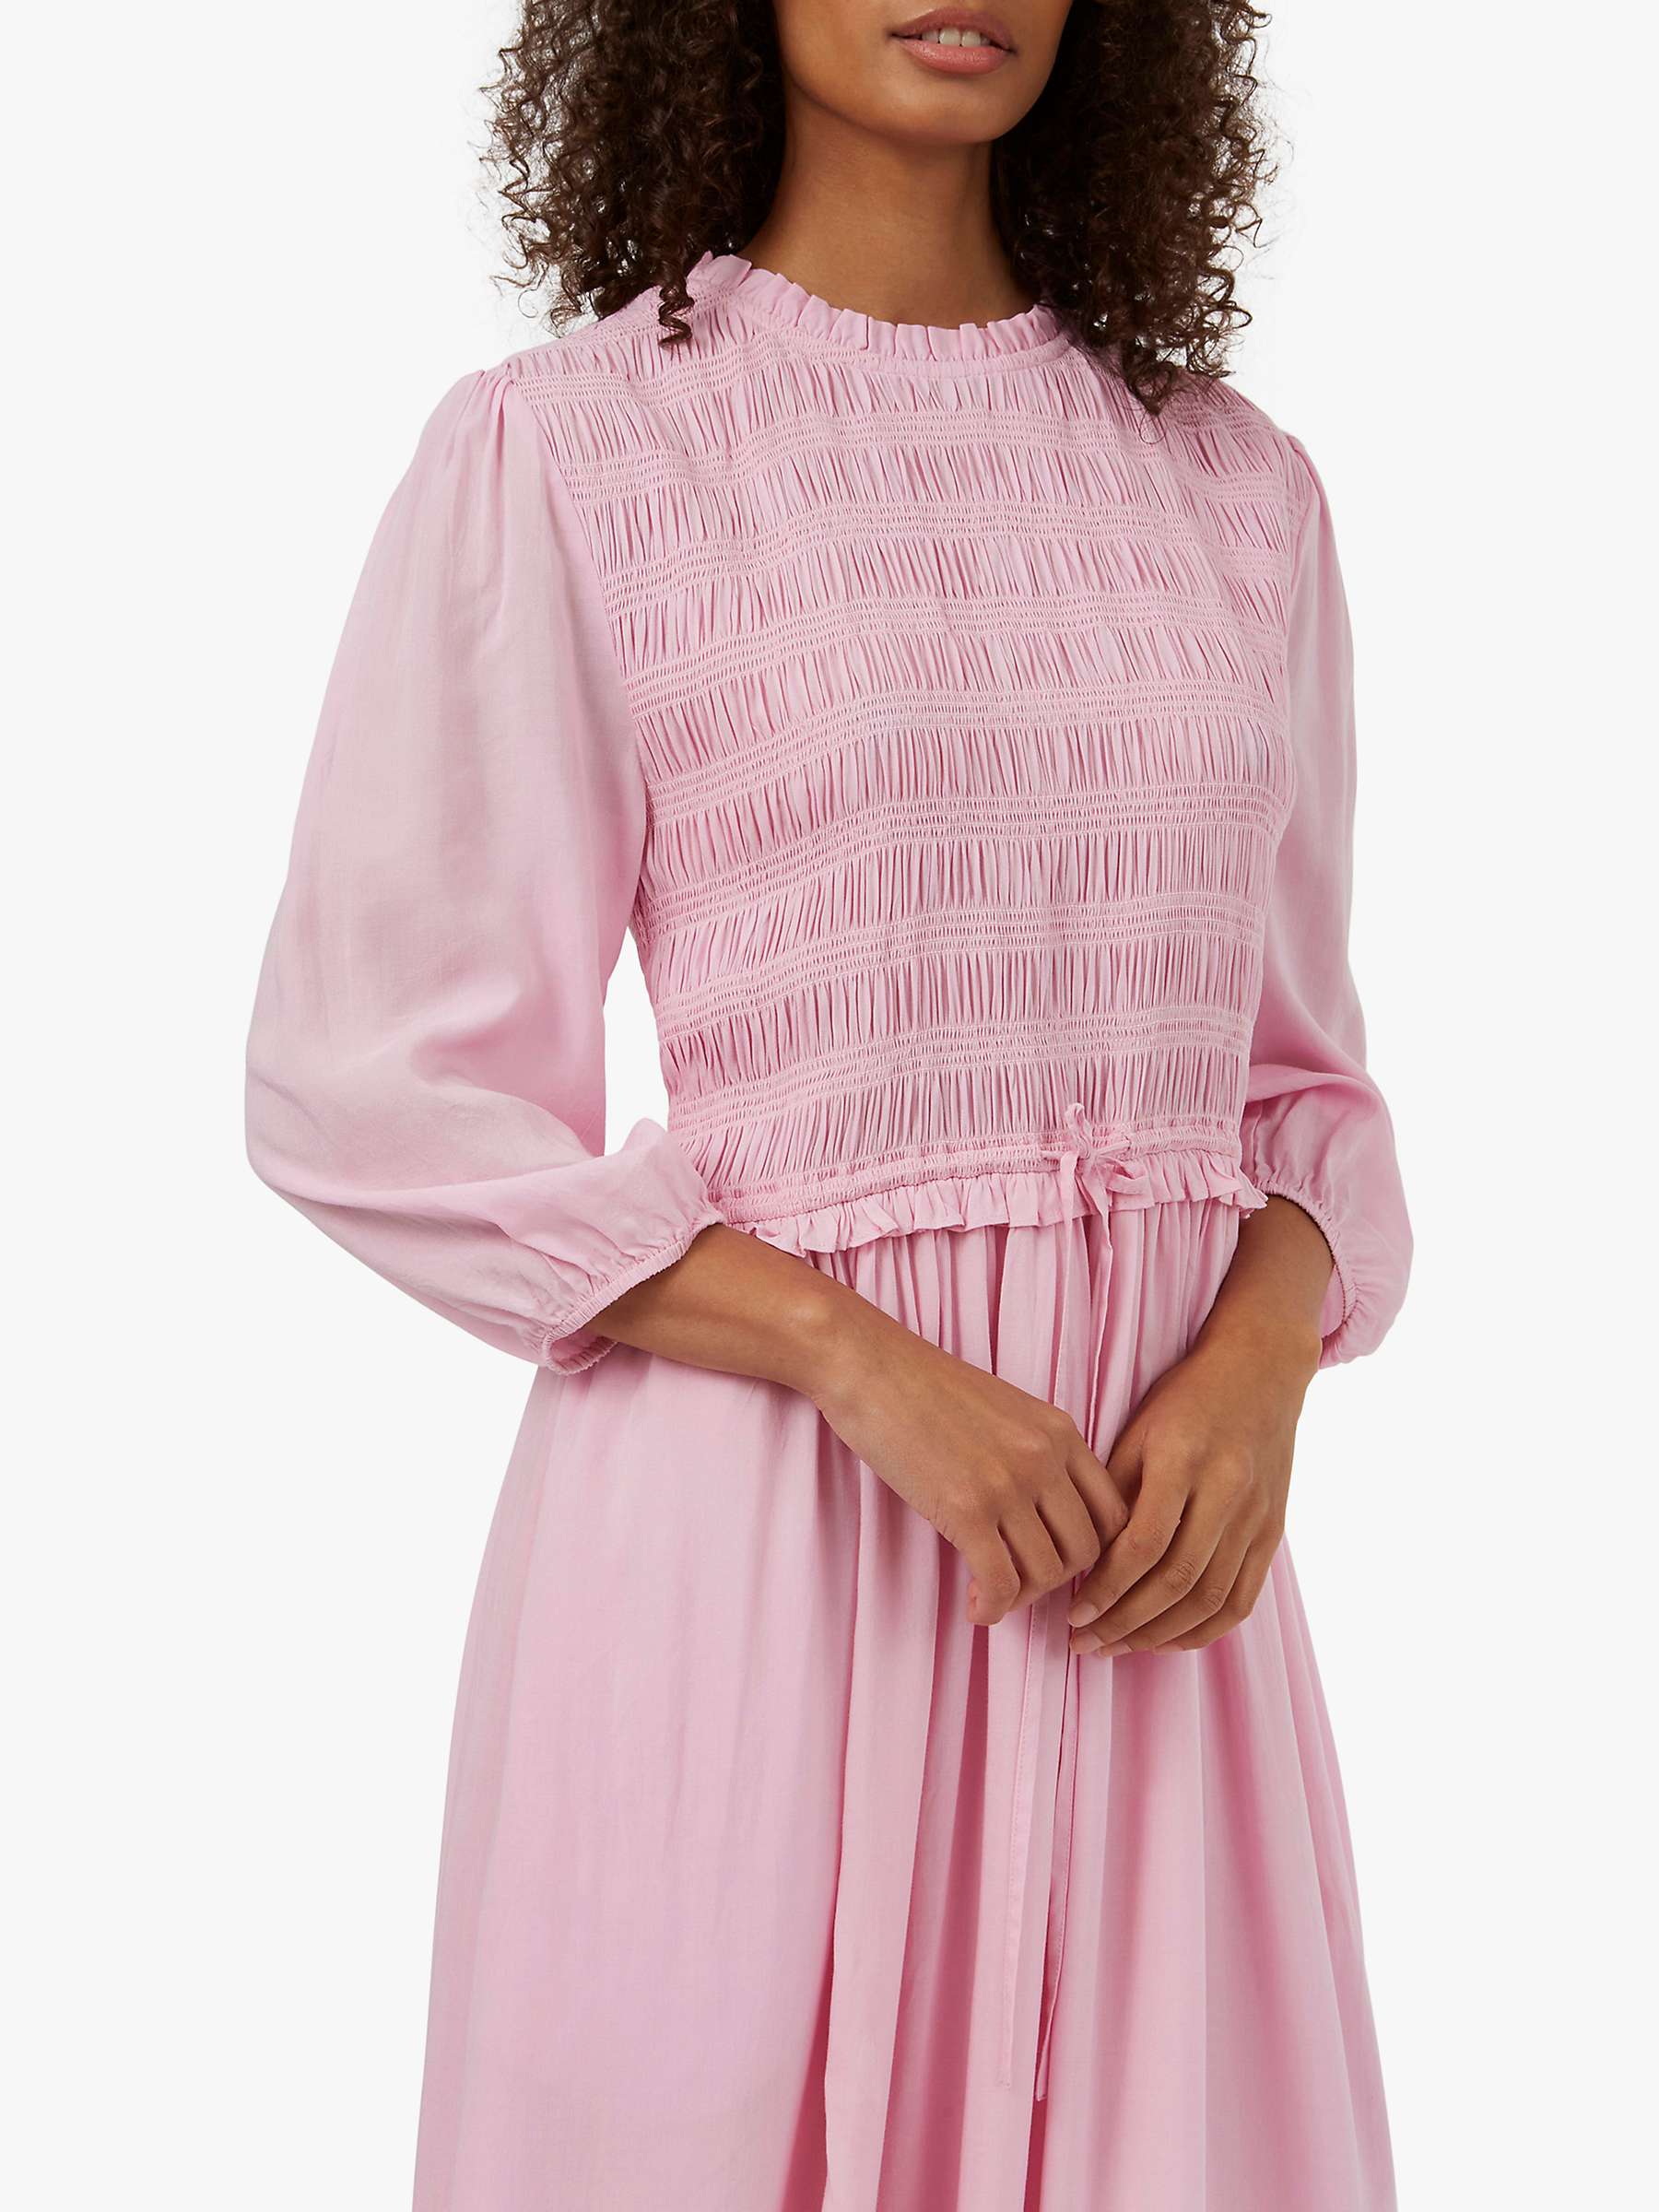 Buy Great Plains Bali Midi Dress Online at johnlewis.com